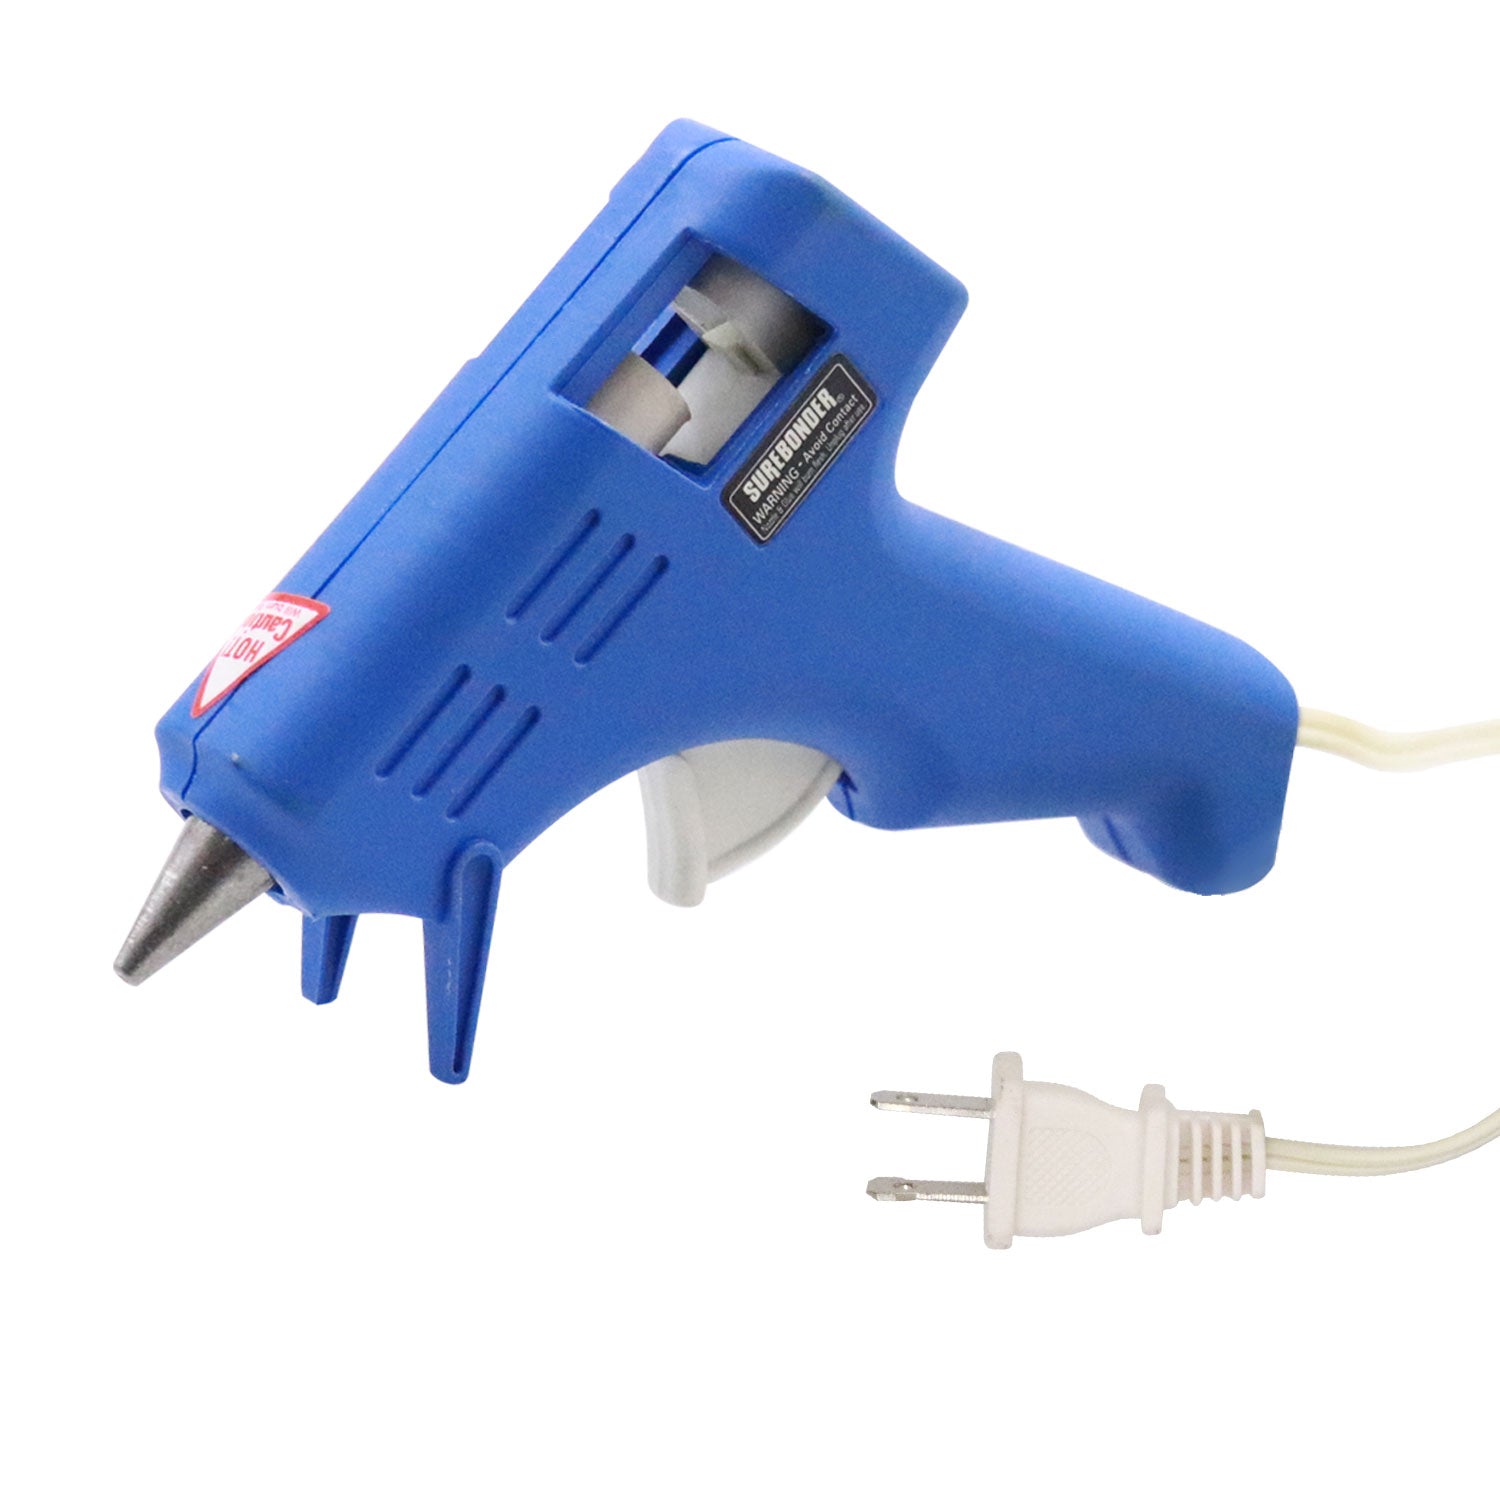 10 Watt Mini Size High Temperature Hot Glue Gun – Surebonder